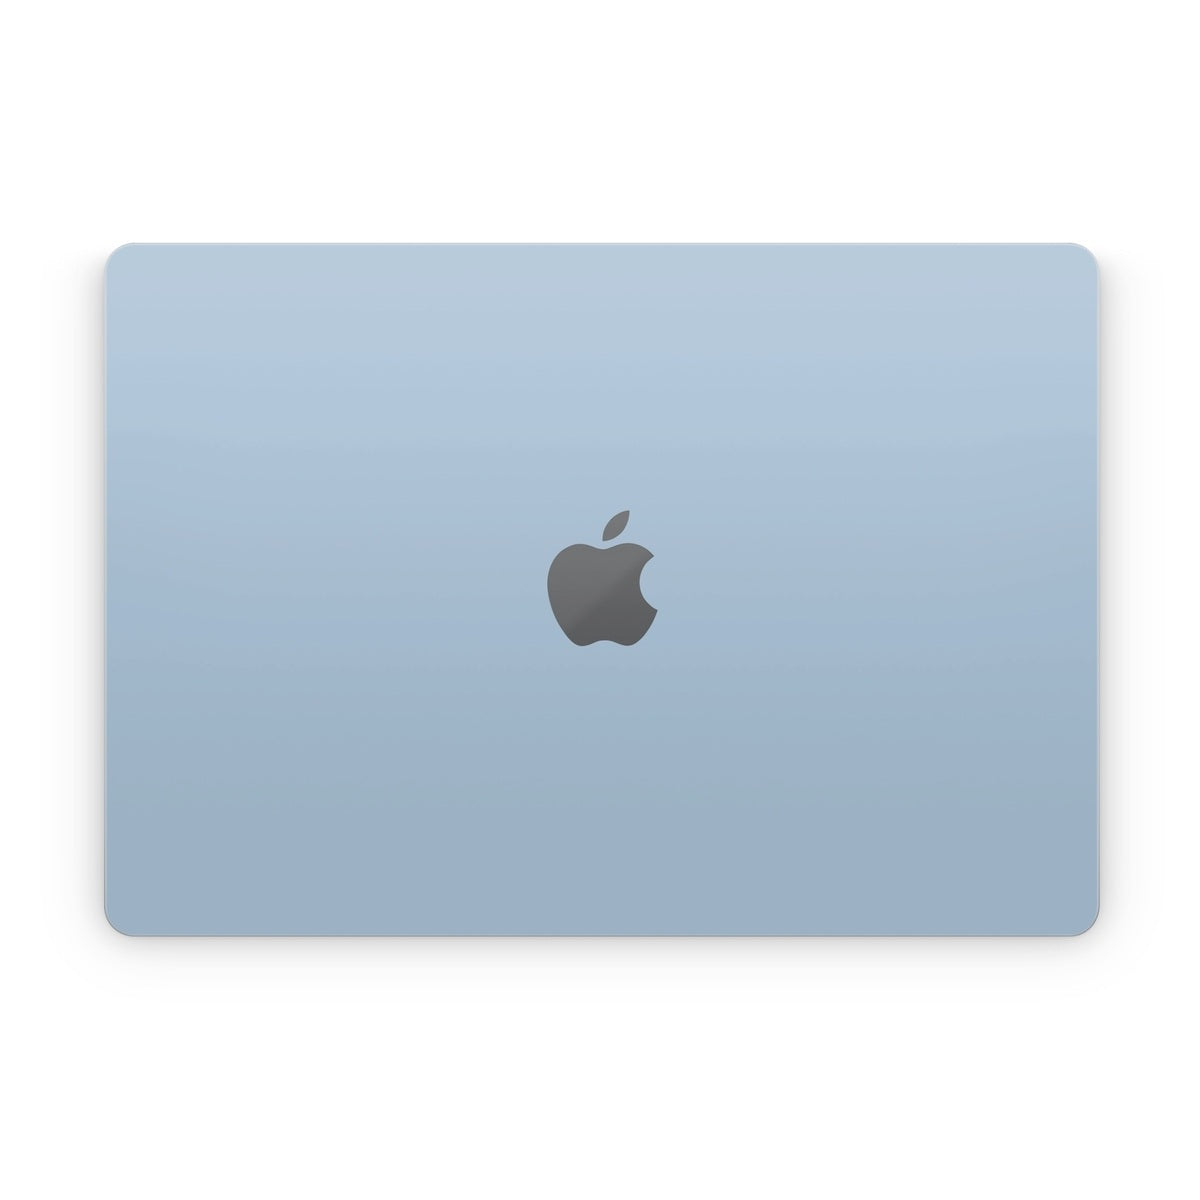 Solid State Blue Mist - Apple MacBook Skin